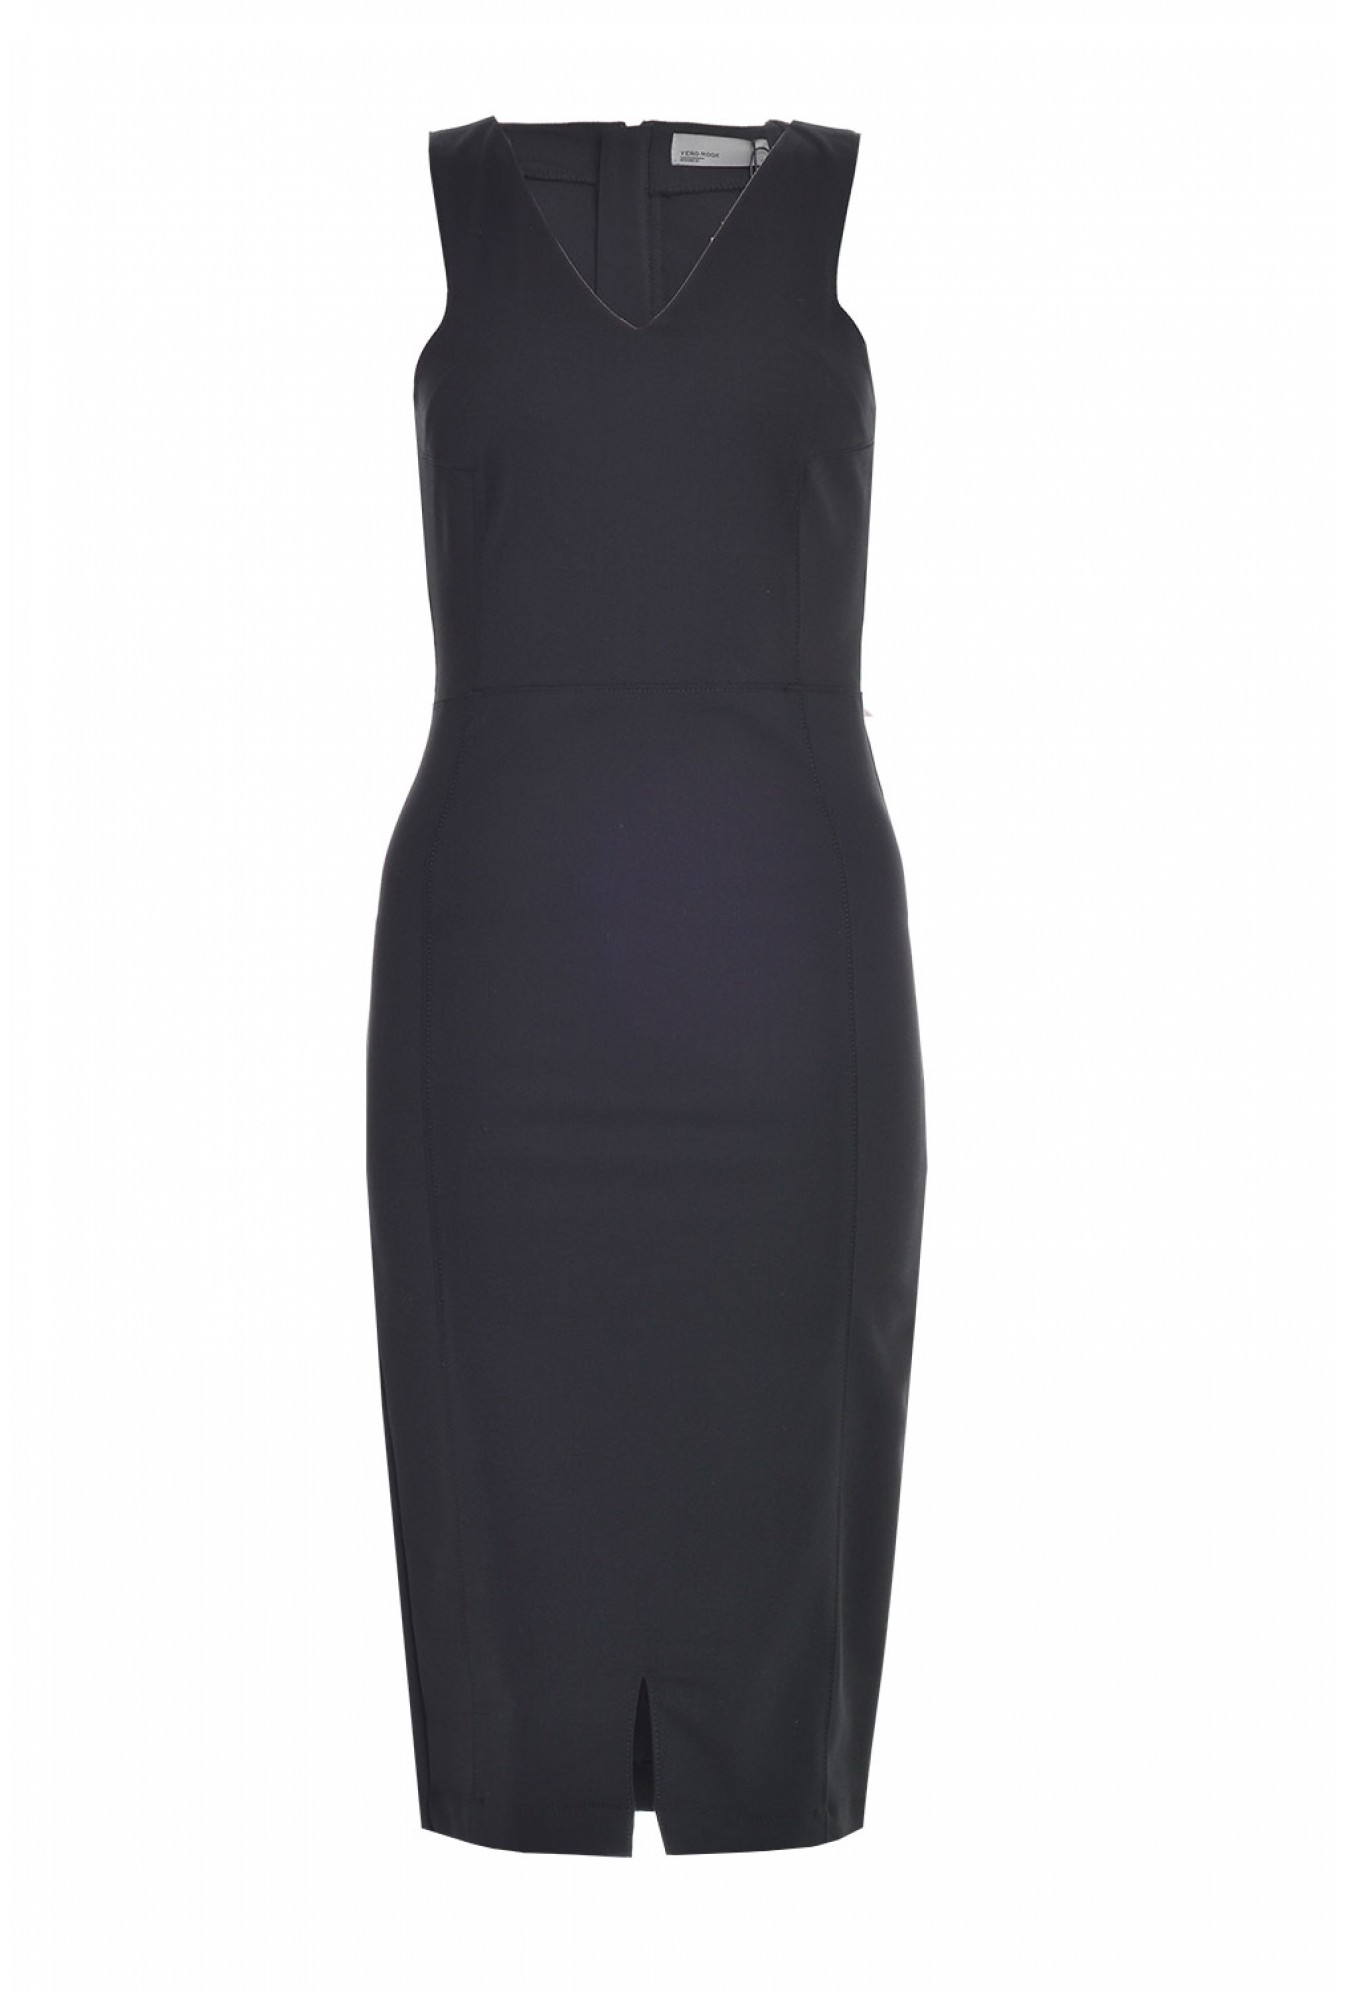 Vero Moda Victoria SL Bodycon Dress in Black | iCLOTHING